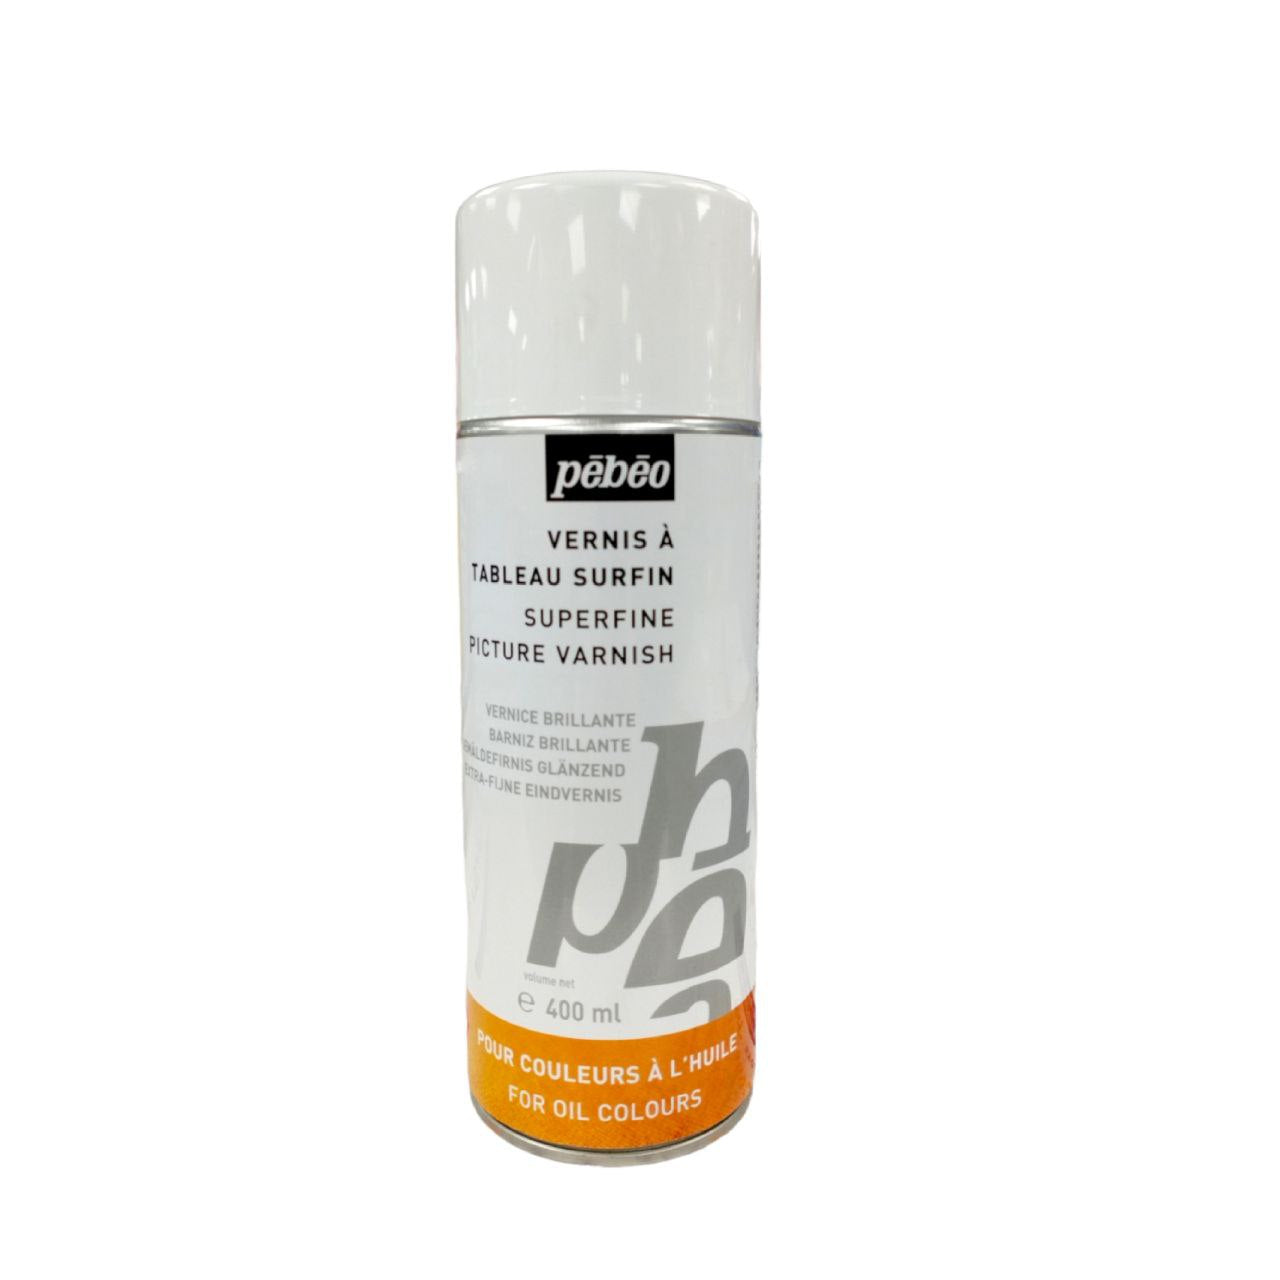 Pebeo Spray Superfine Picture Varnish Brilliant For Oil and Acrylic Colors 400 ml || ورنيش سبراي بيبيو لامع ٤٠٠ مل للزيتي و اكريليك 